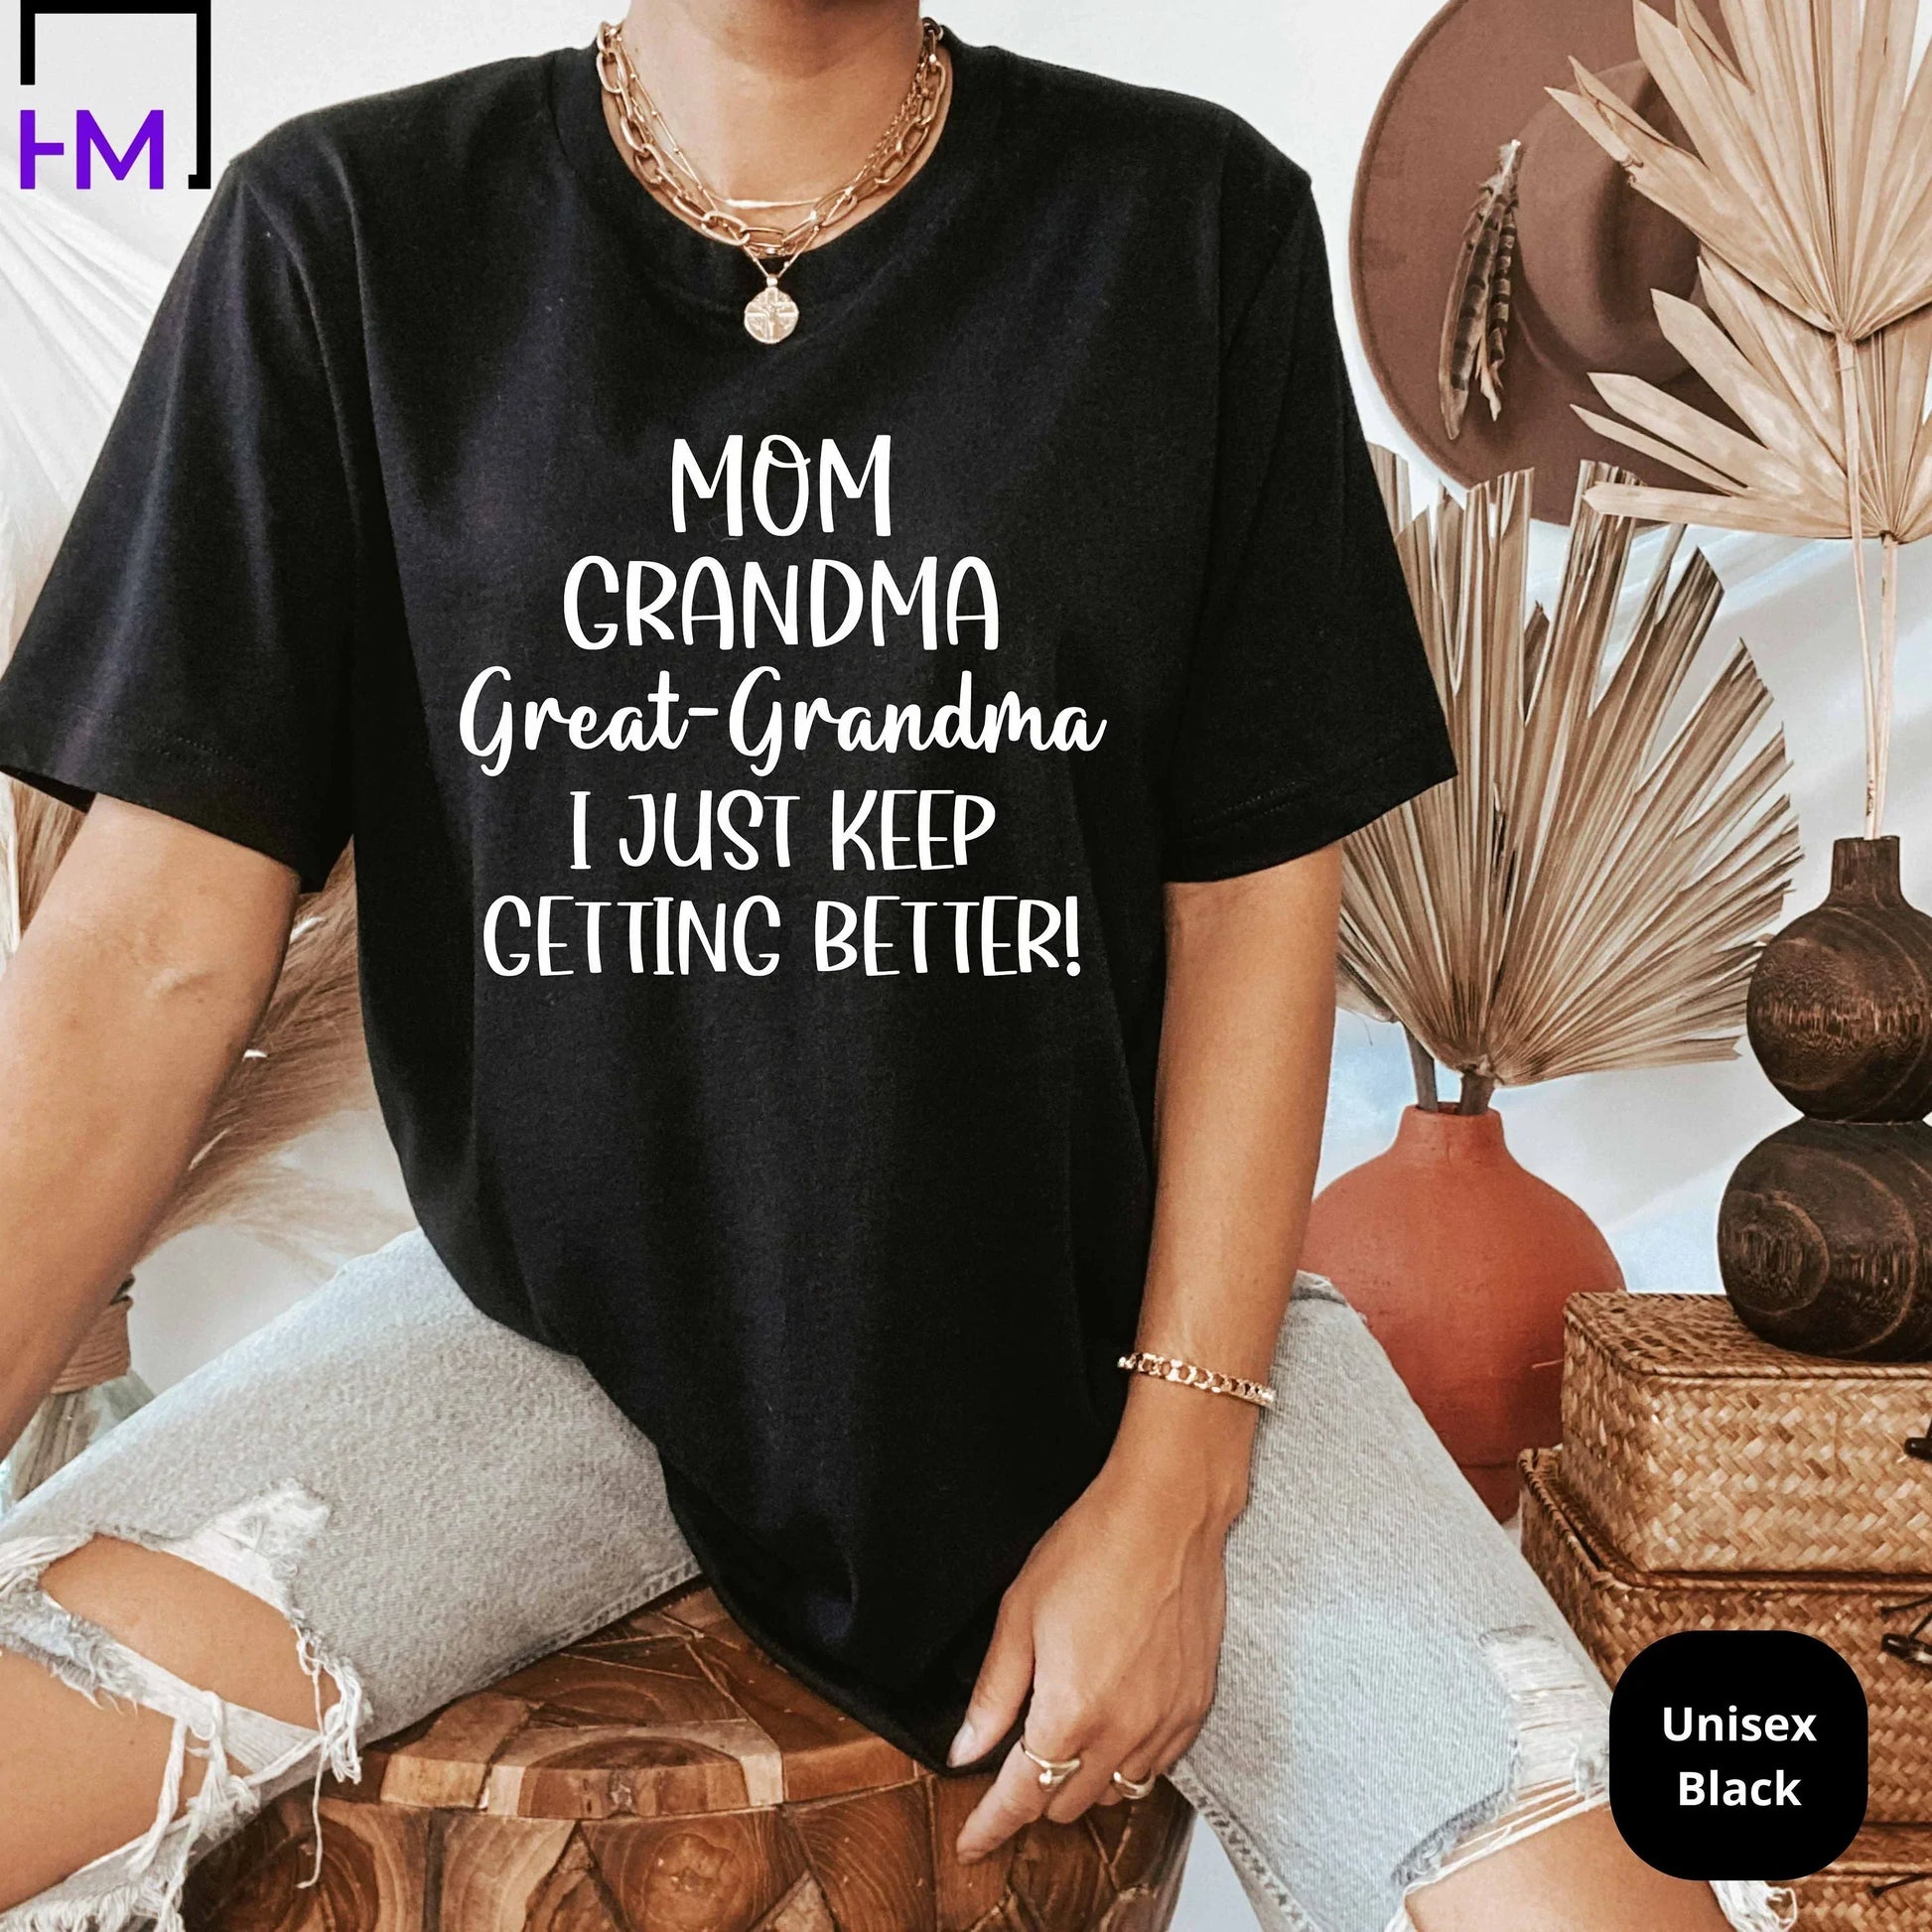 Mom Grandma Great-Grandma Sweatshirt, Pregnancy Announcement, Gift For Grandma, Baby Reveal Shirt, Mother's Day Gift, Grandma Sweatshirt